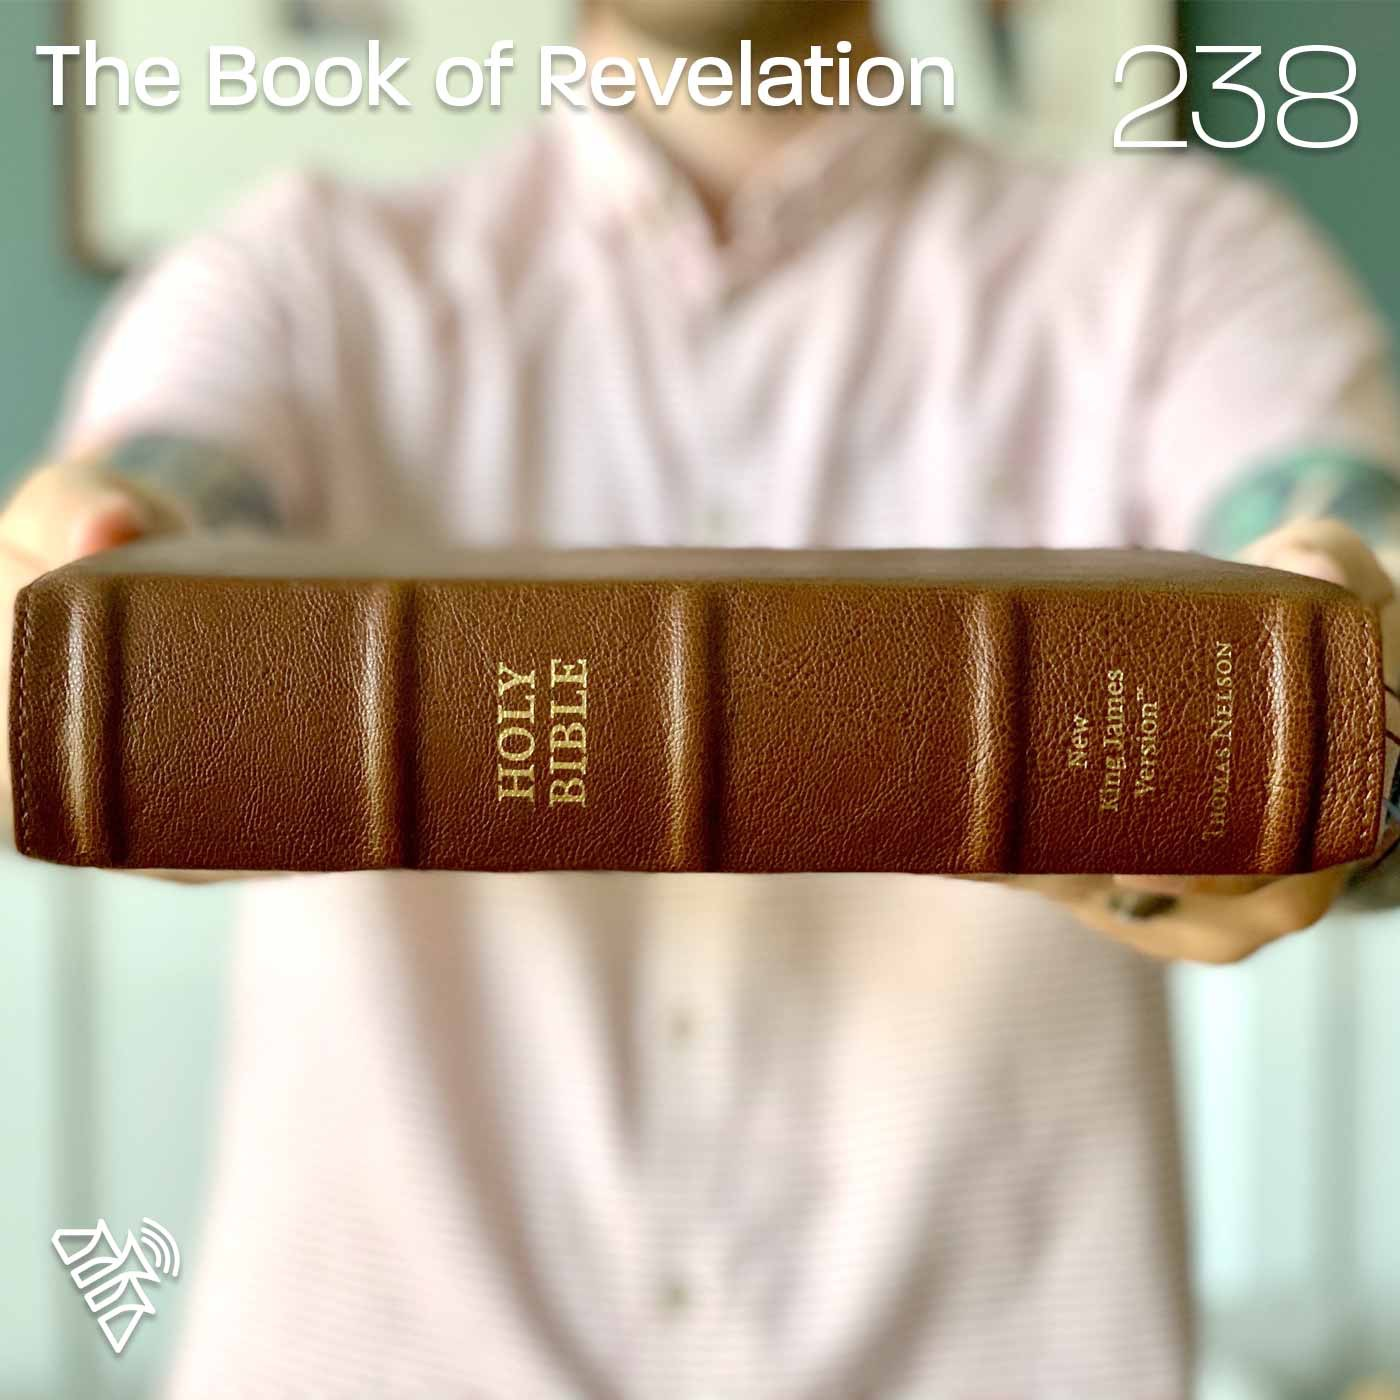 The Book of Revelation - Pr Graeme Hazledine - 238